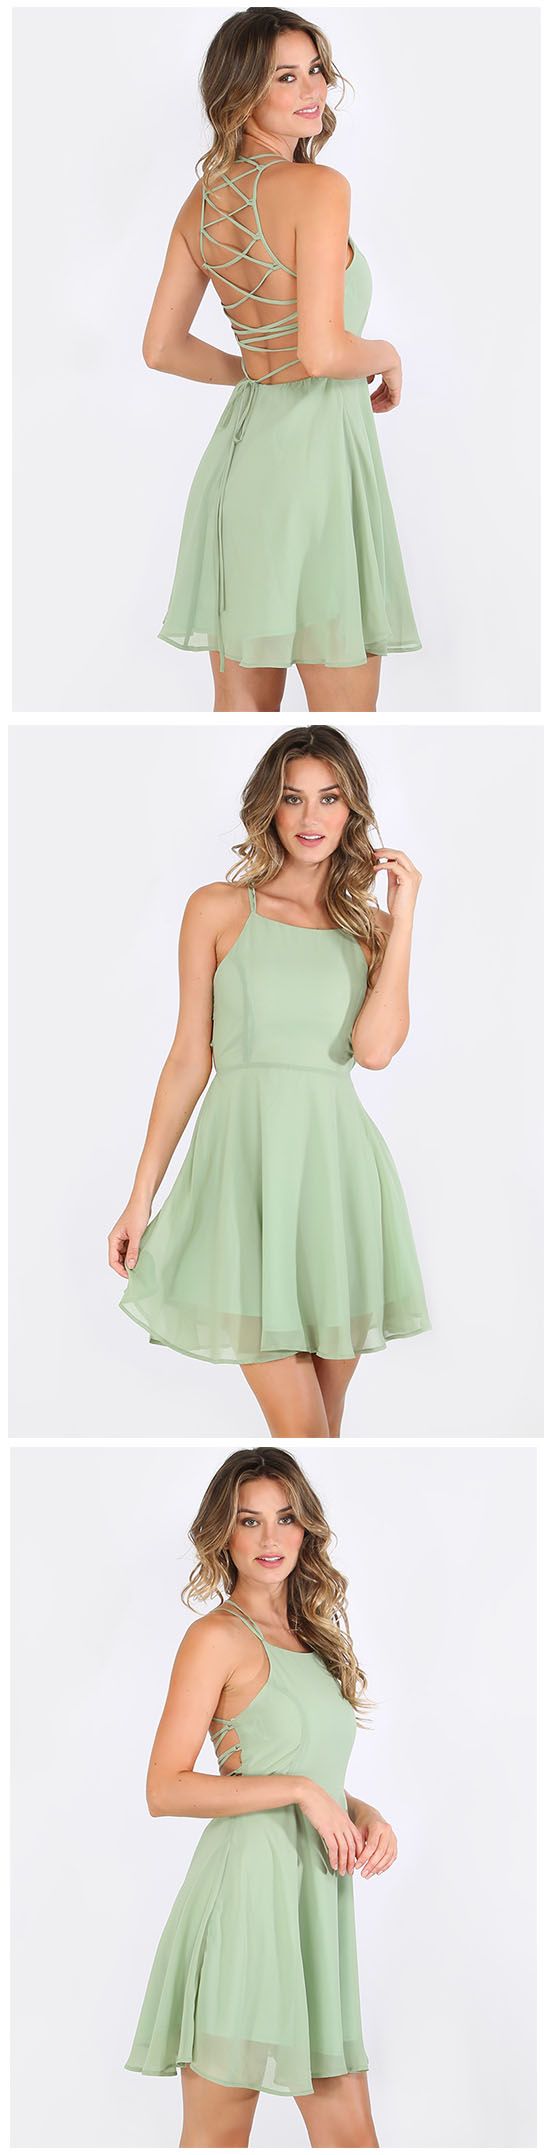 Custom Made Mint Green Strappy Halter Neck Chiffon Short Cocktail Dress, Graduation Dress, Evening Dress, Homecoming Dress